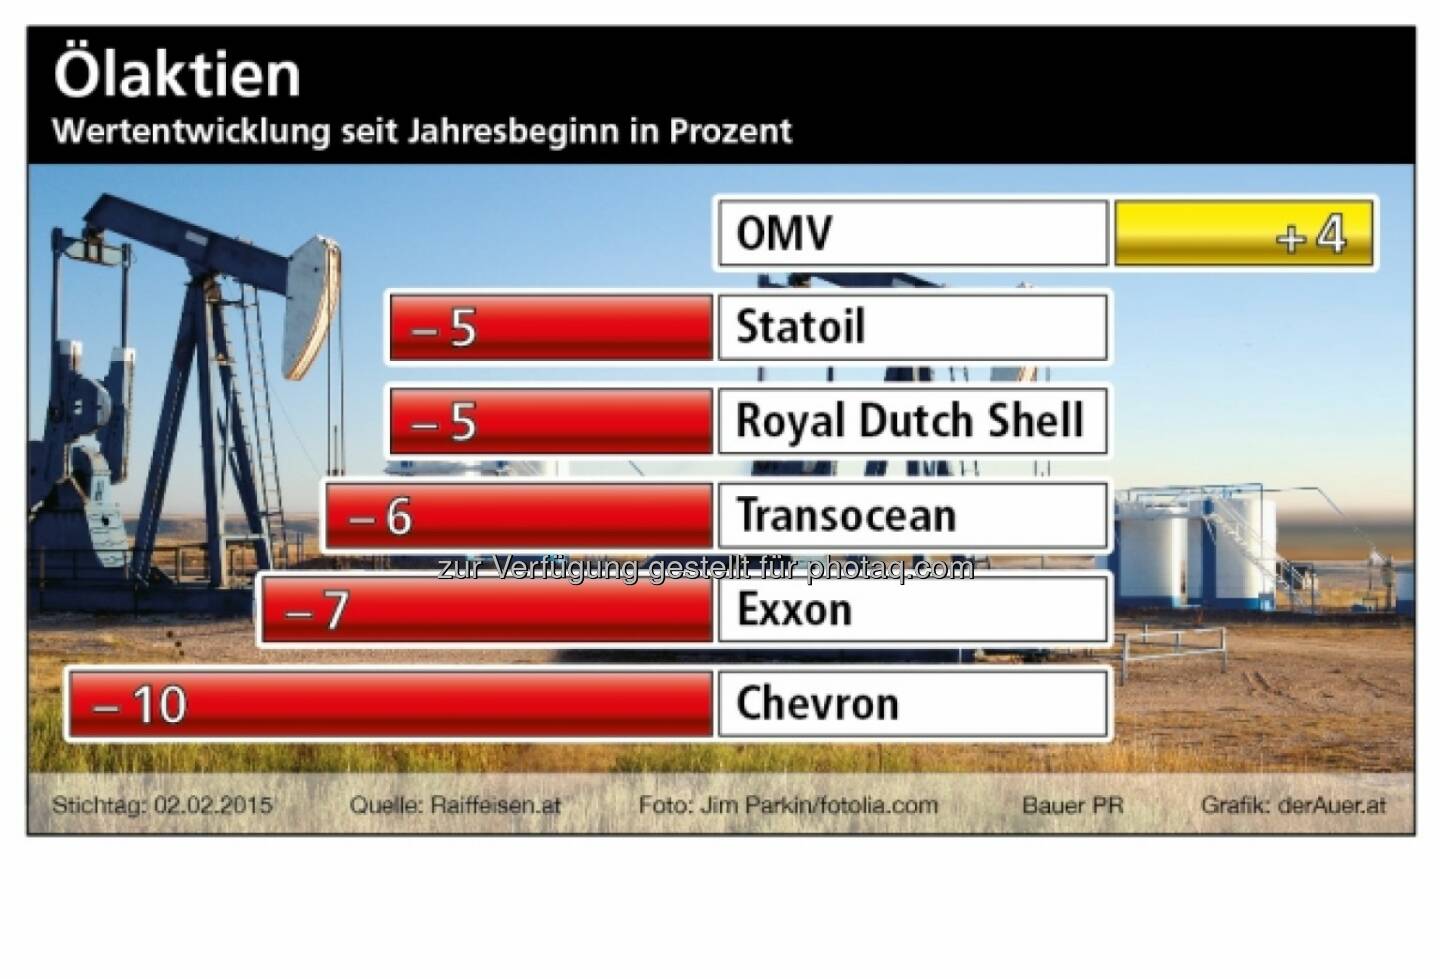 Ölaktien seit Jahresbeginn OMV, Statoil, Royal Dutch, Transocean, Exxon, Chevron © BauerPR / derauer.at